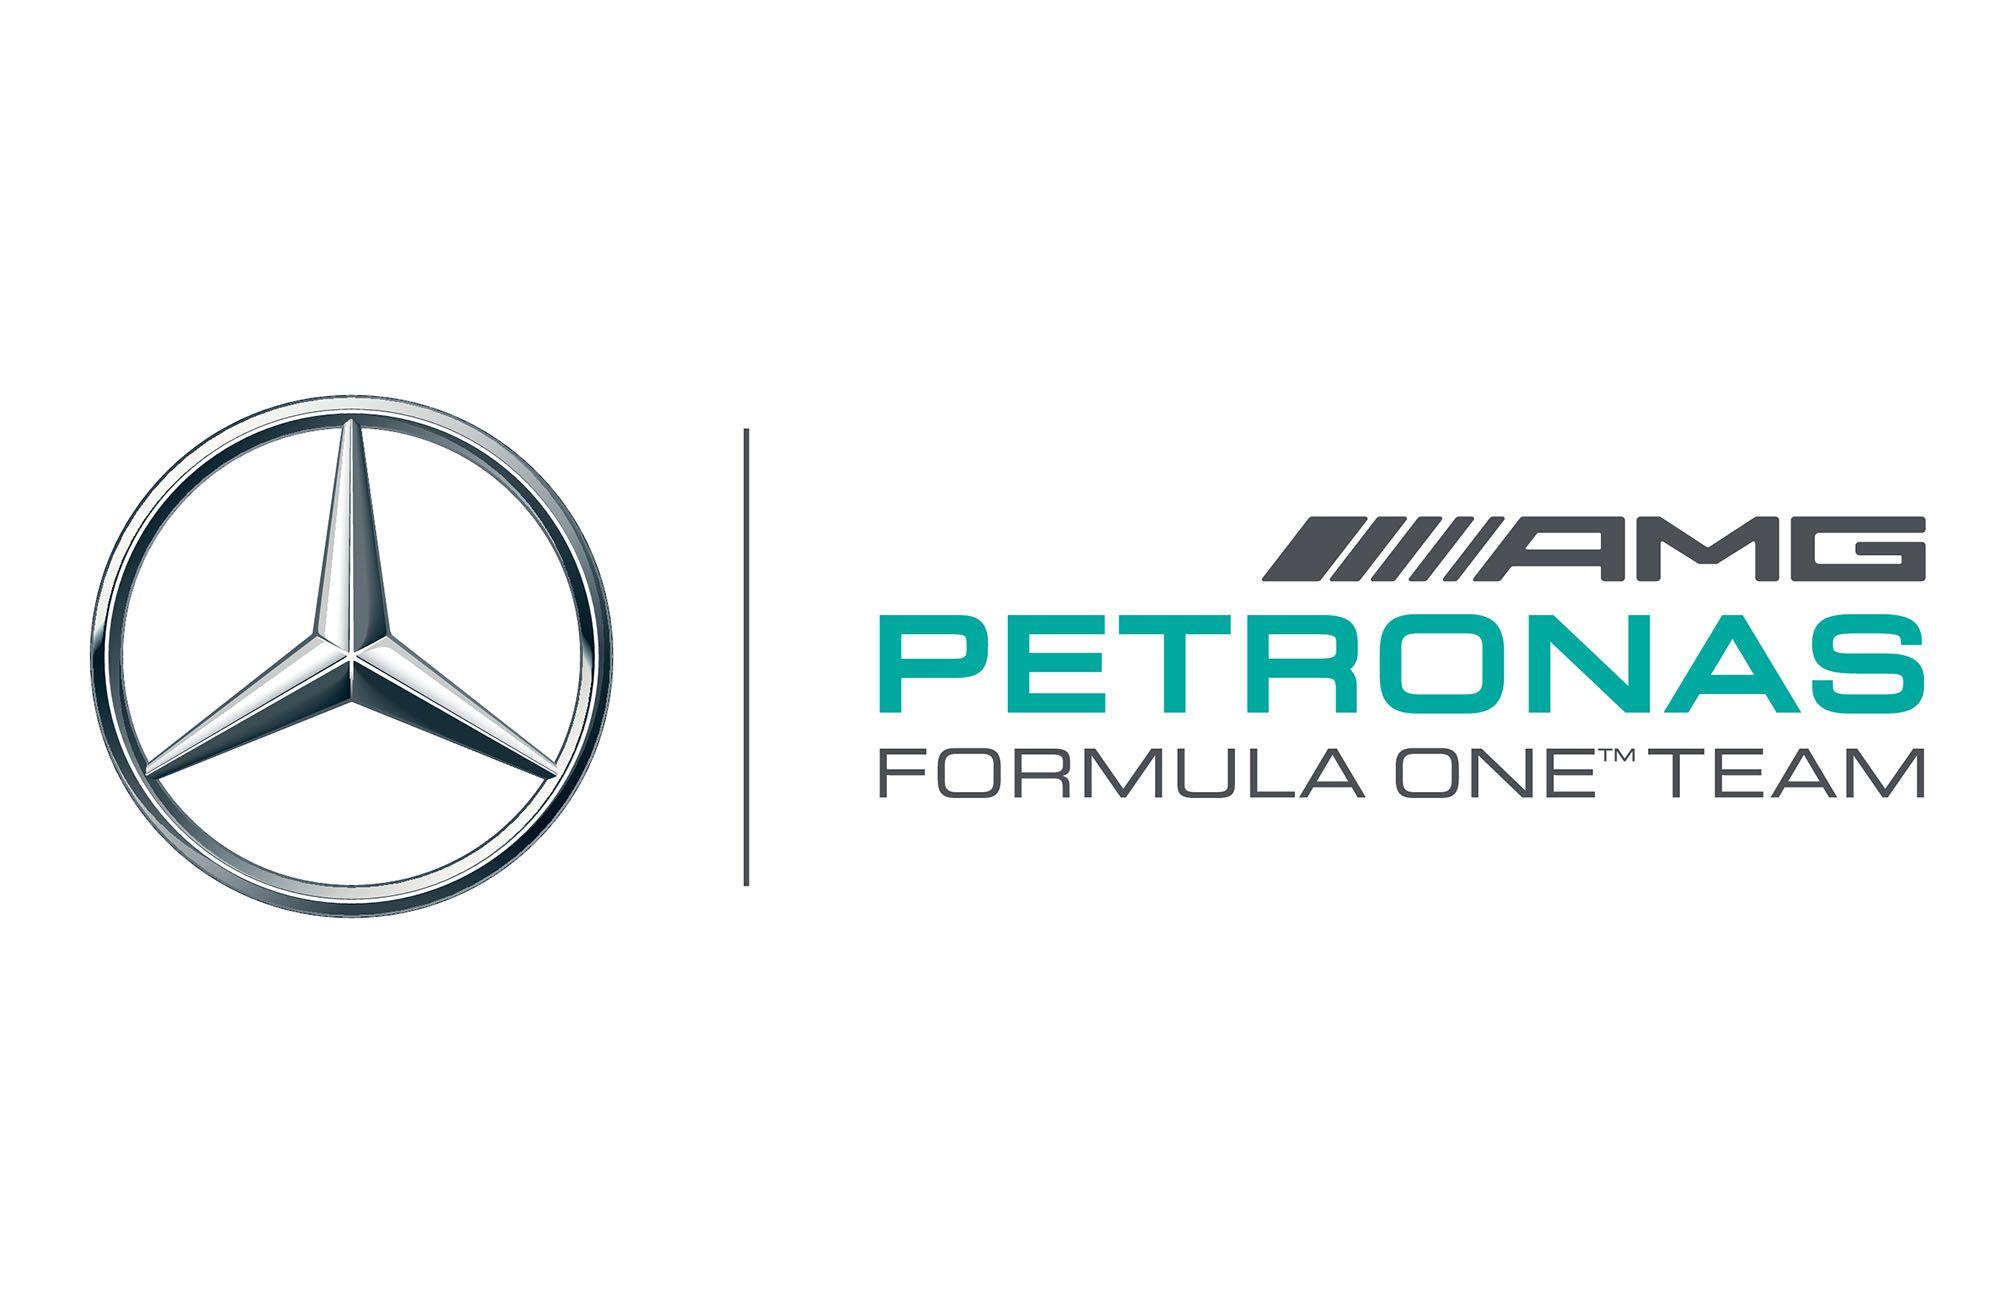 2018 Mercedes Logo - 2018 Mercedes F1 Team Menswear Lewis Hamilton Official Formula One ...